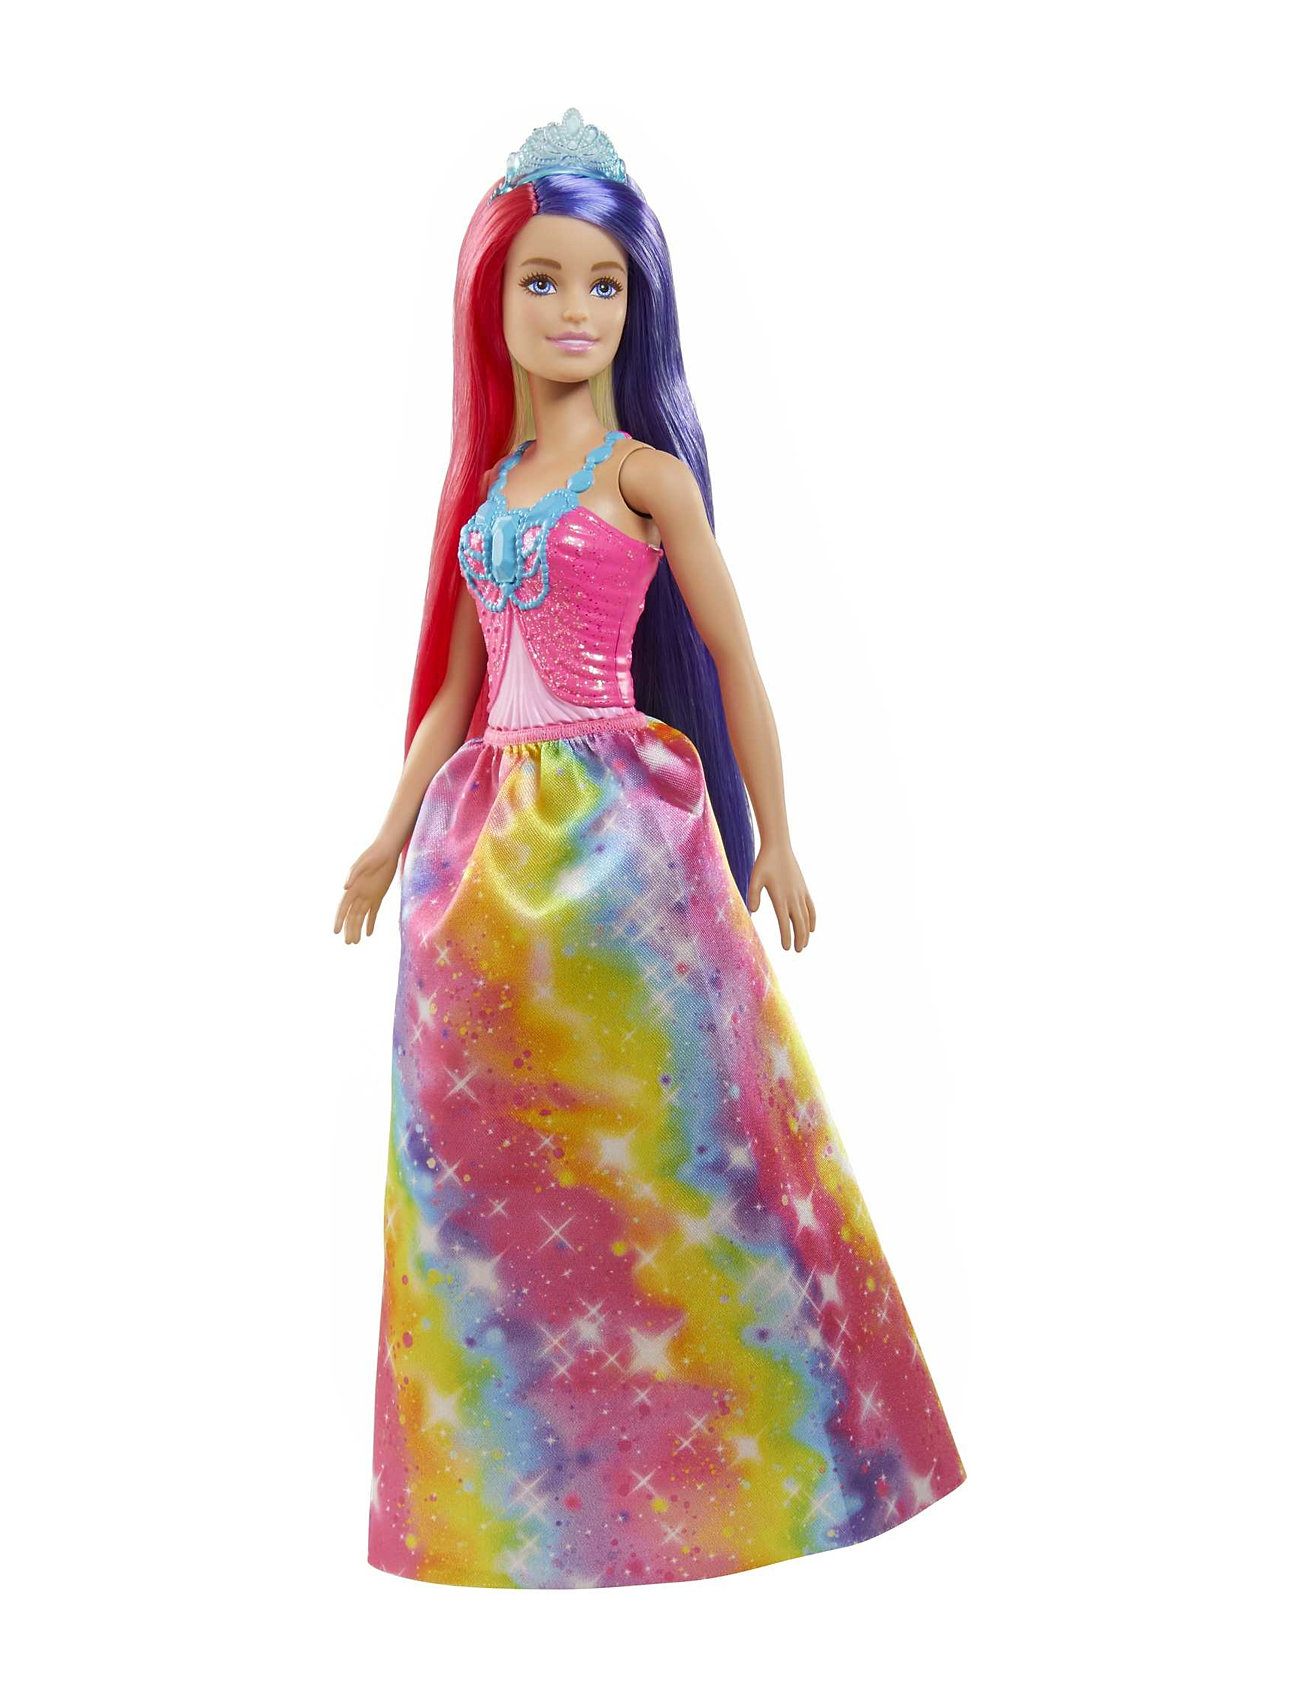 Dreamtopia Doll Toys Dolls & Accessories Dolls Multi/patterned Barbie